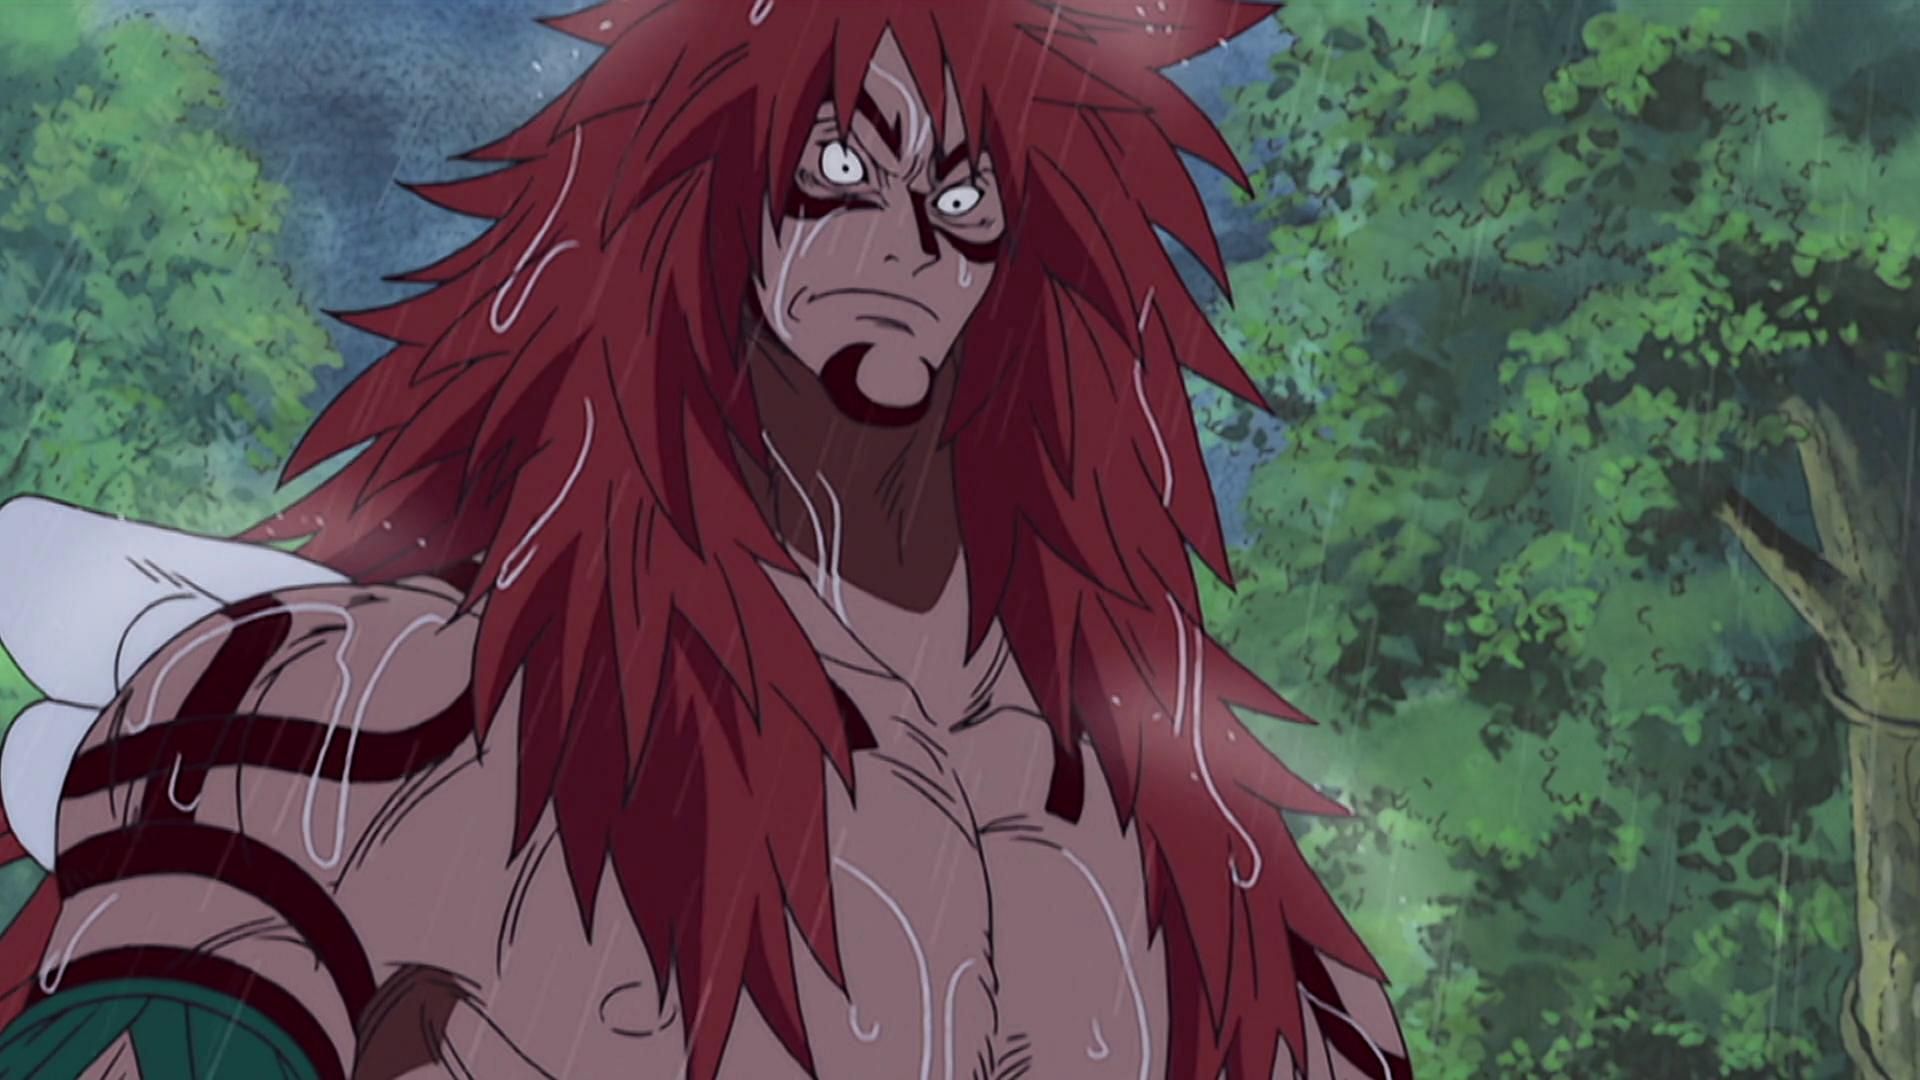 Kalgara initially despised Noland (Image via Toei Animation, One Piece)